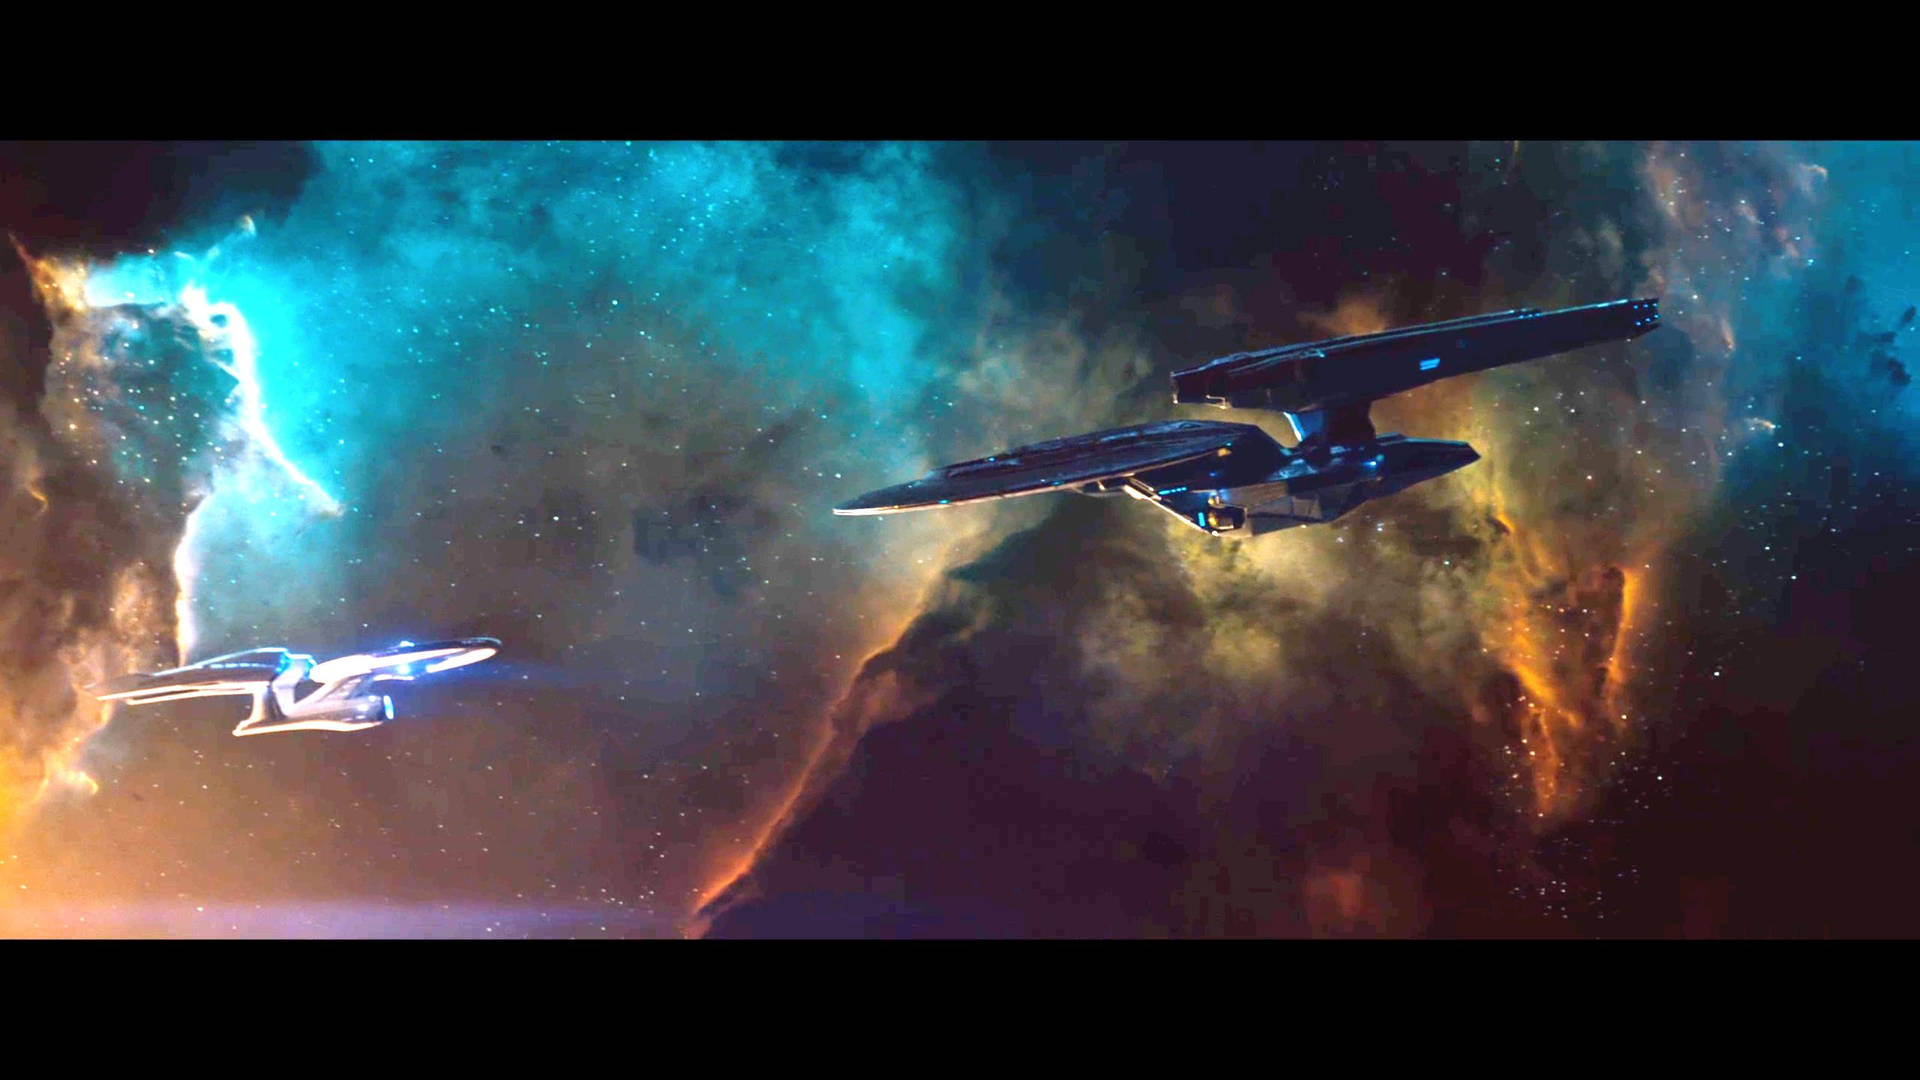 Wallpaper of faceoff of two spaceships in Star Trek. 